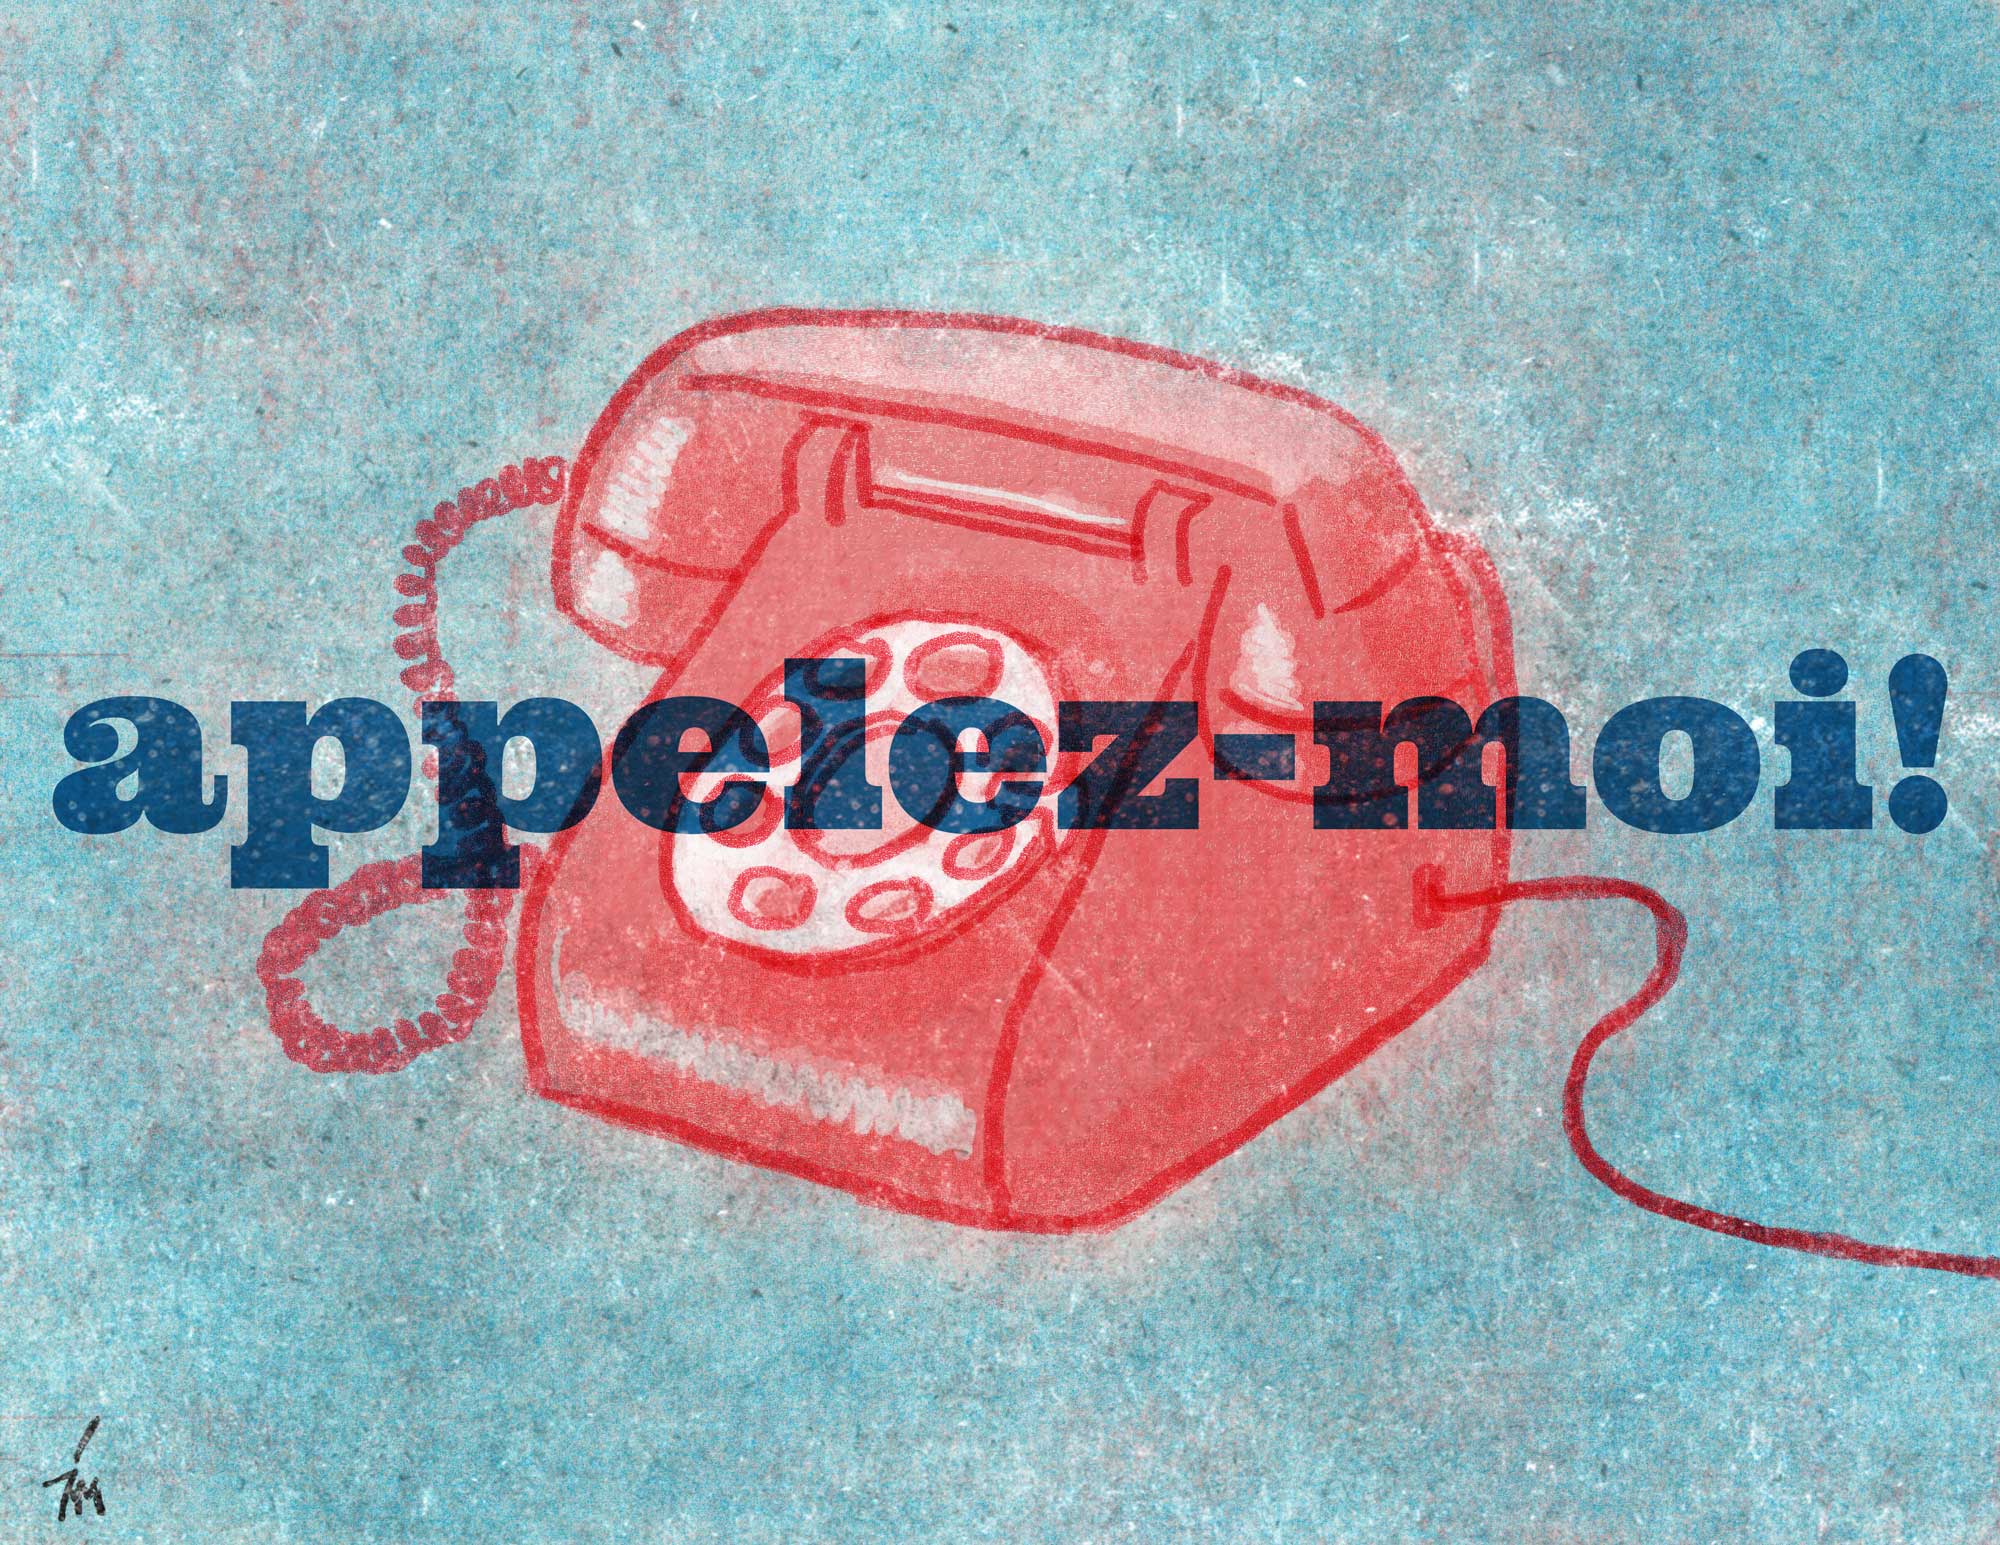 image of vintage telephone.